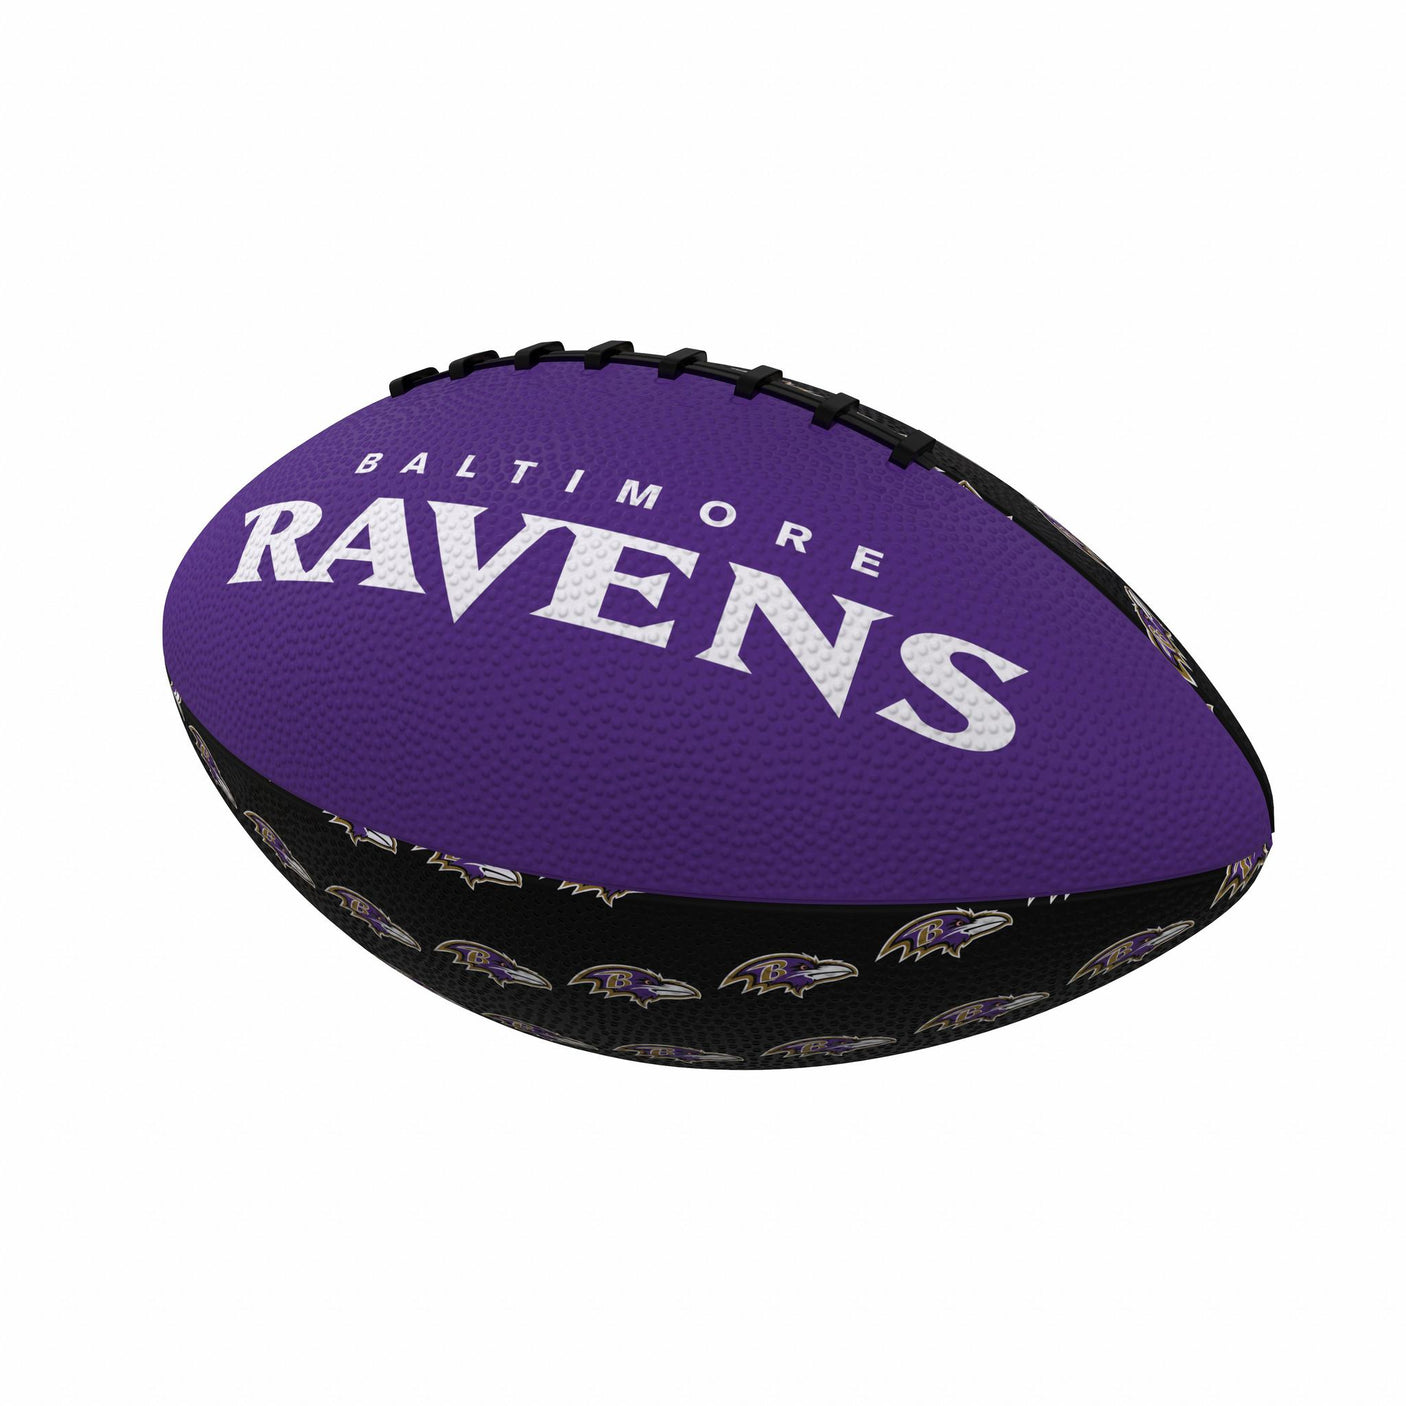 Ravens Repeating Mini Size Rubber Football